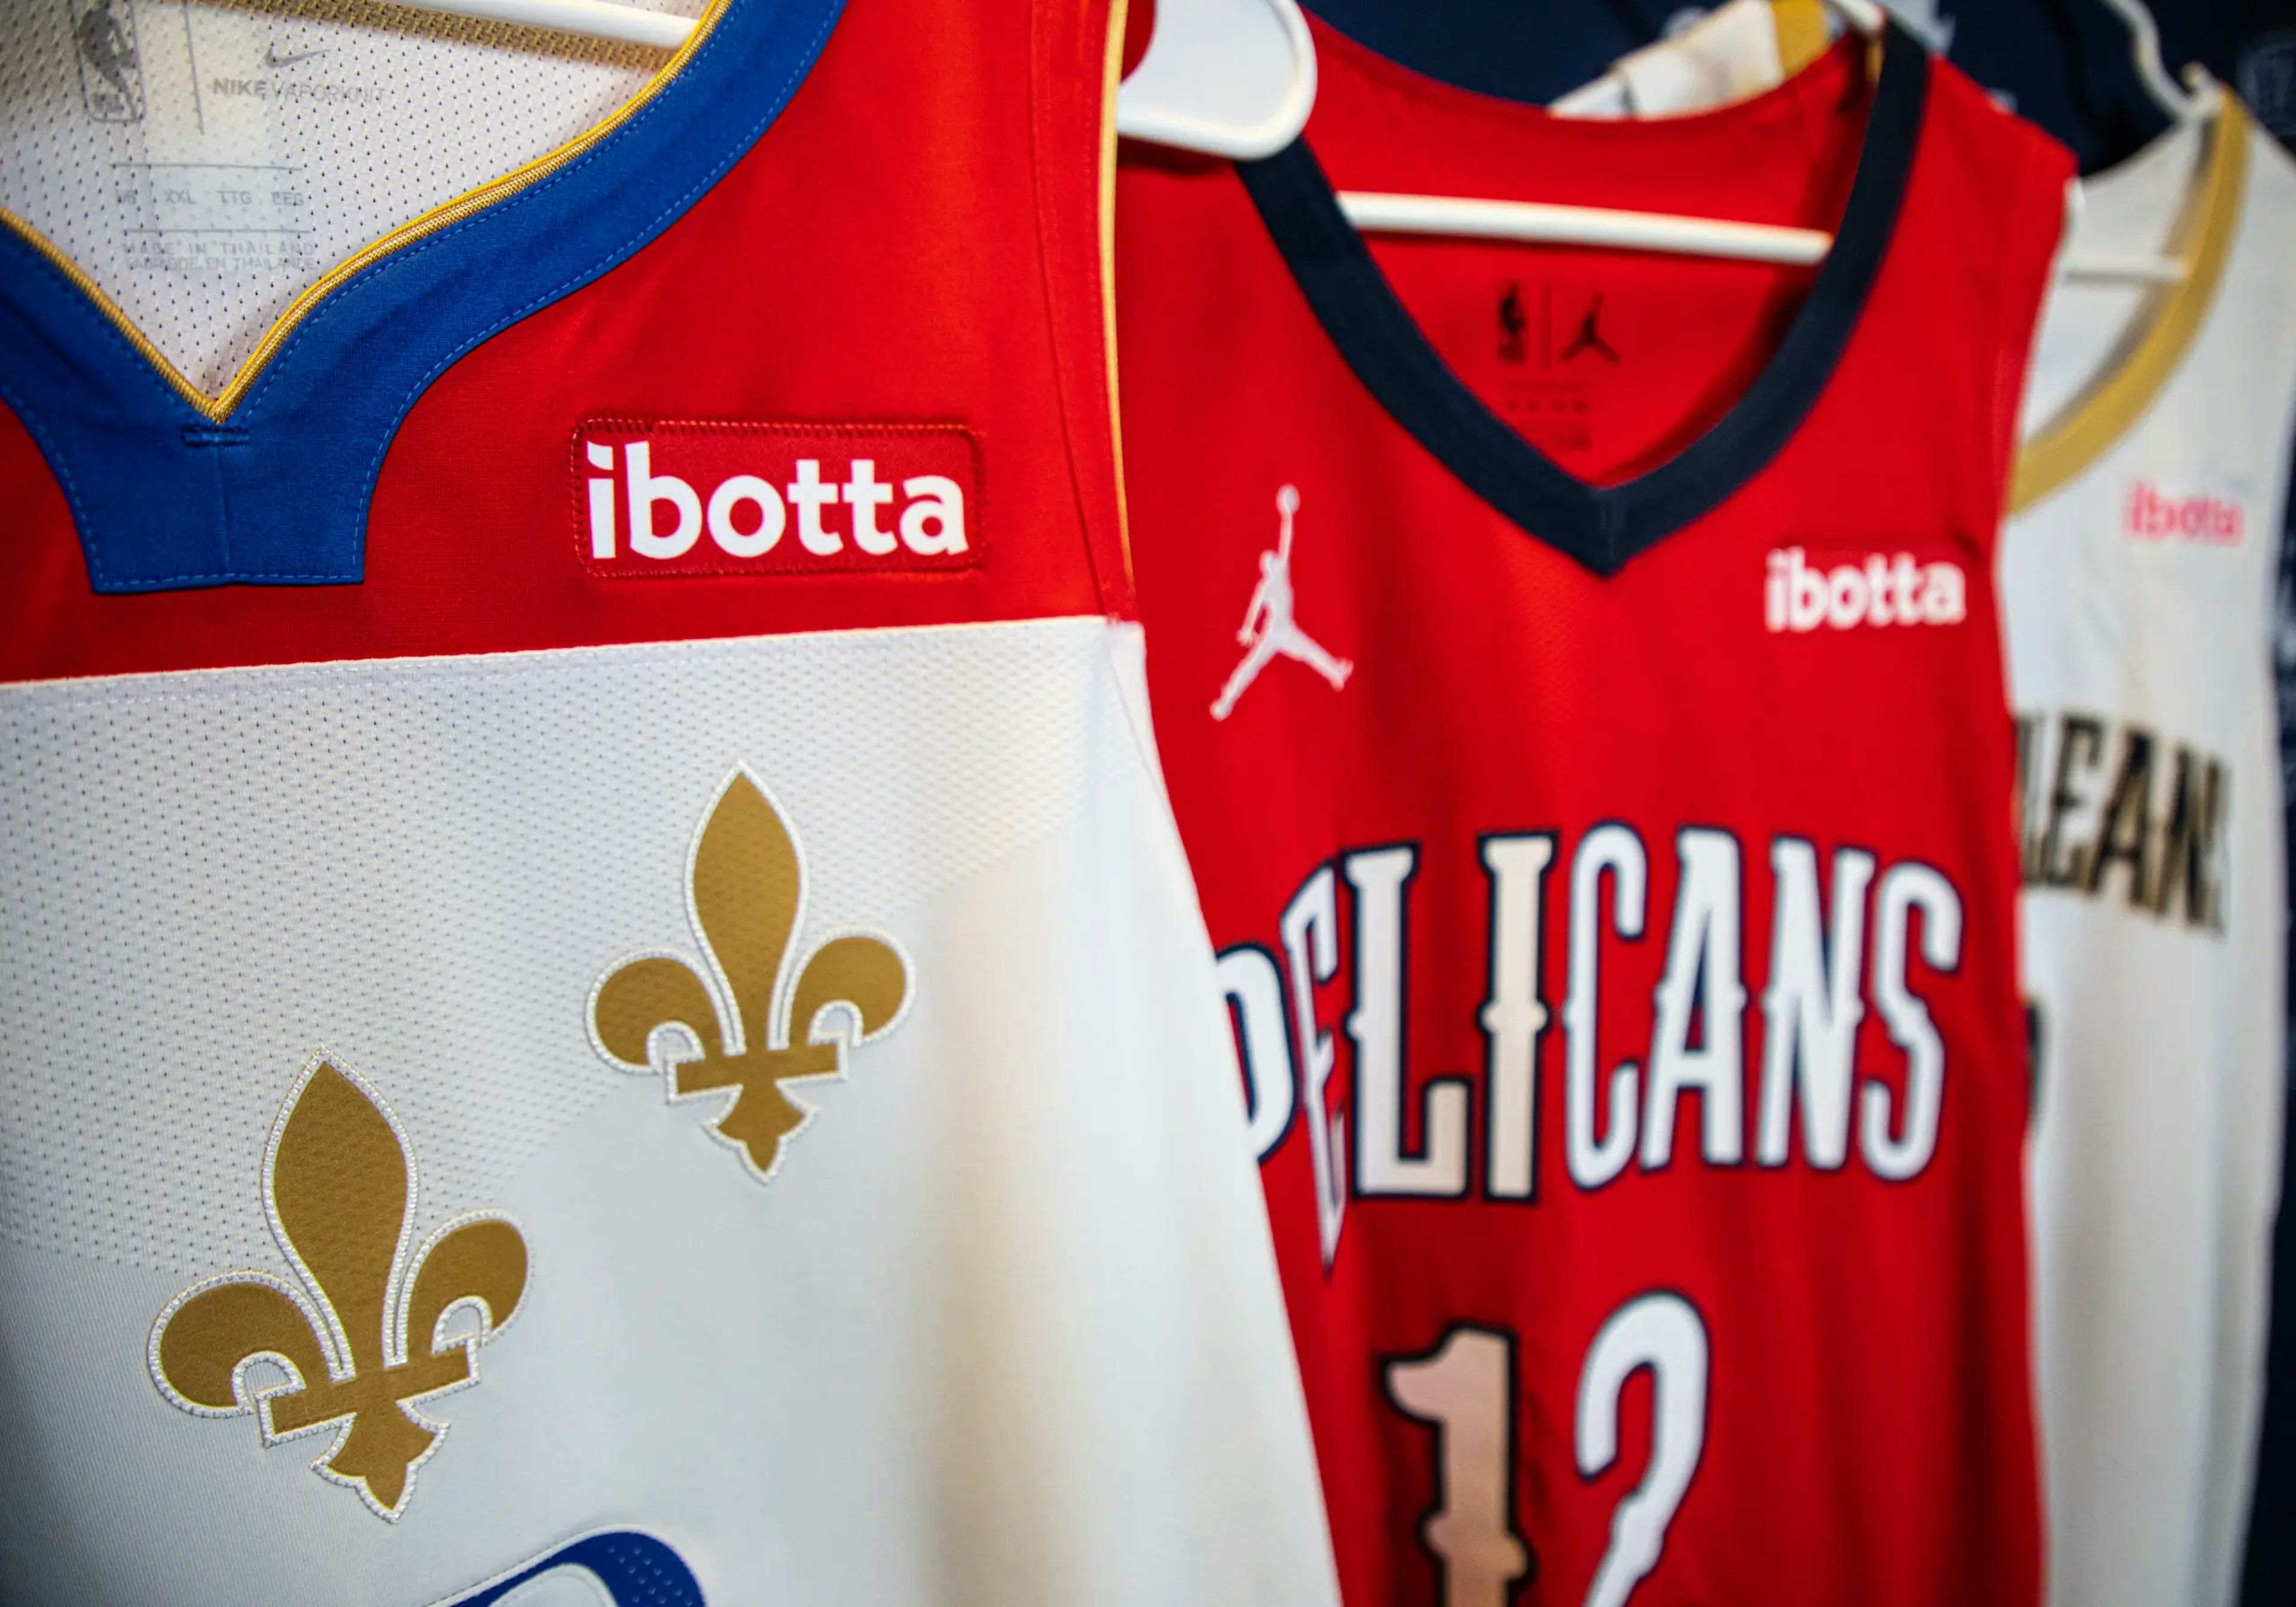 New Orleans Pelicans NBA Team jerseys, sponsored by Ibotta